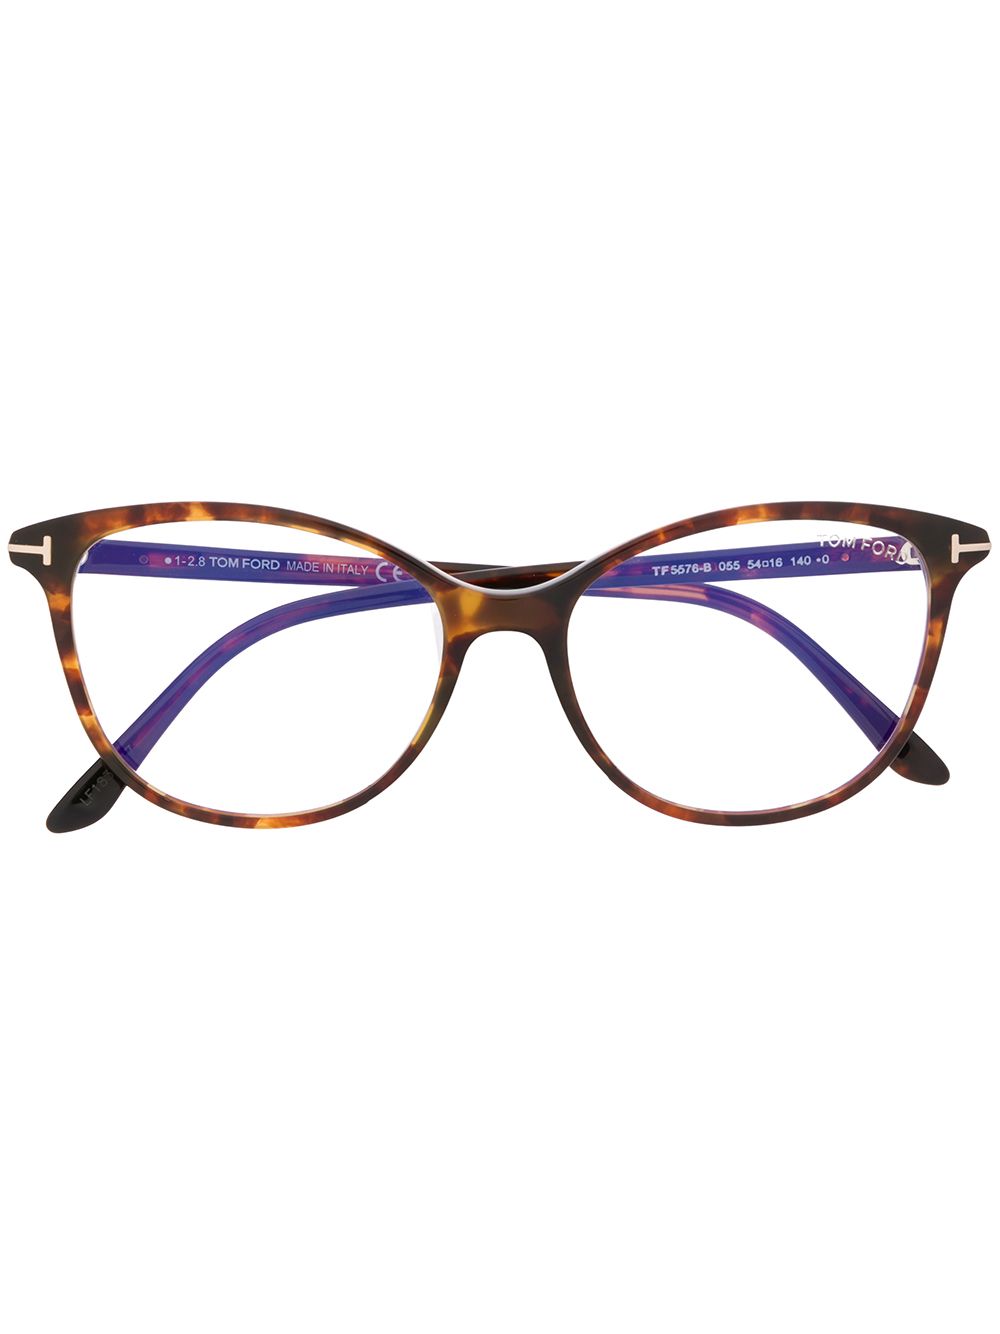 фото Tom ford eyewear очки tf5576-b в оправе черепаховой расцветки